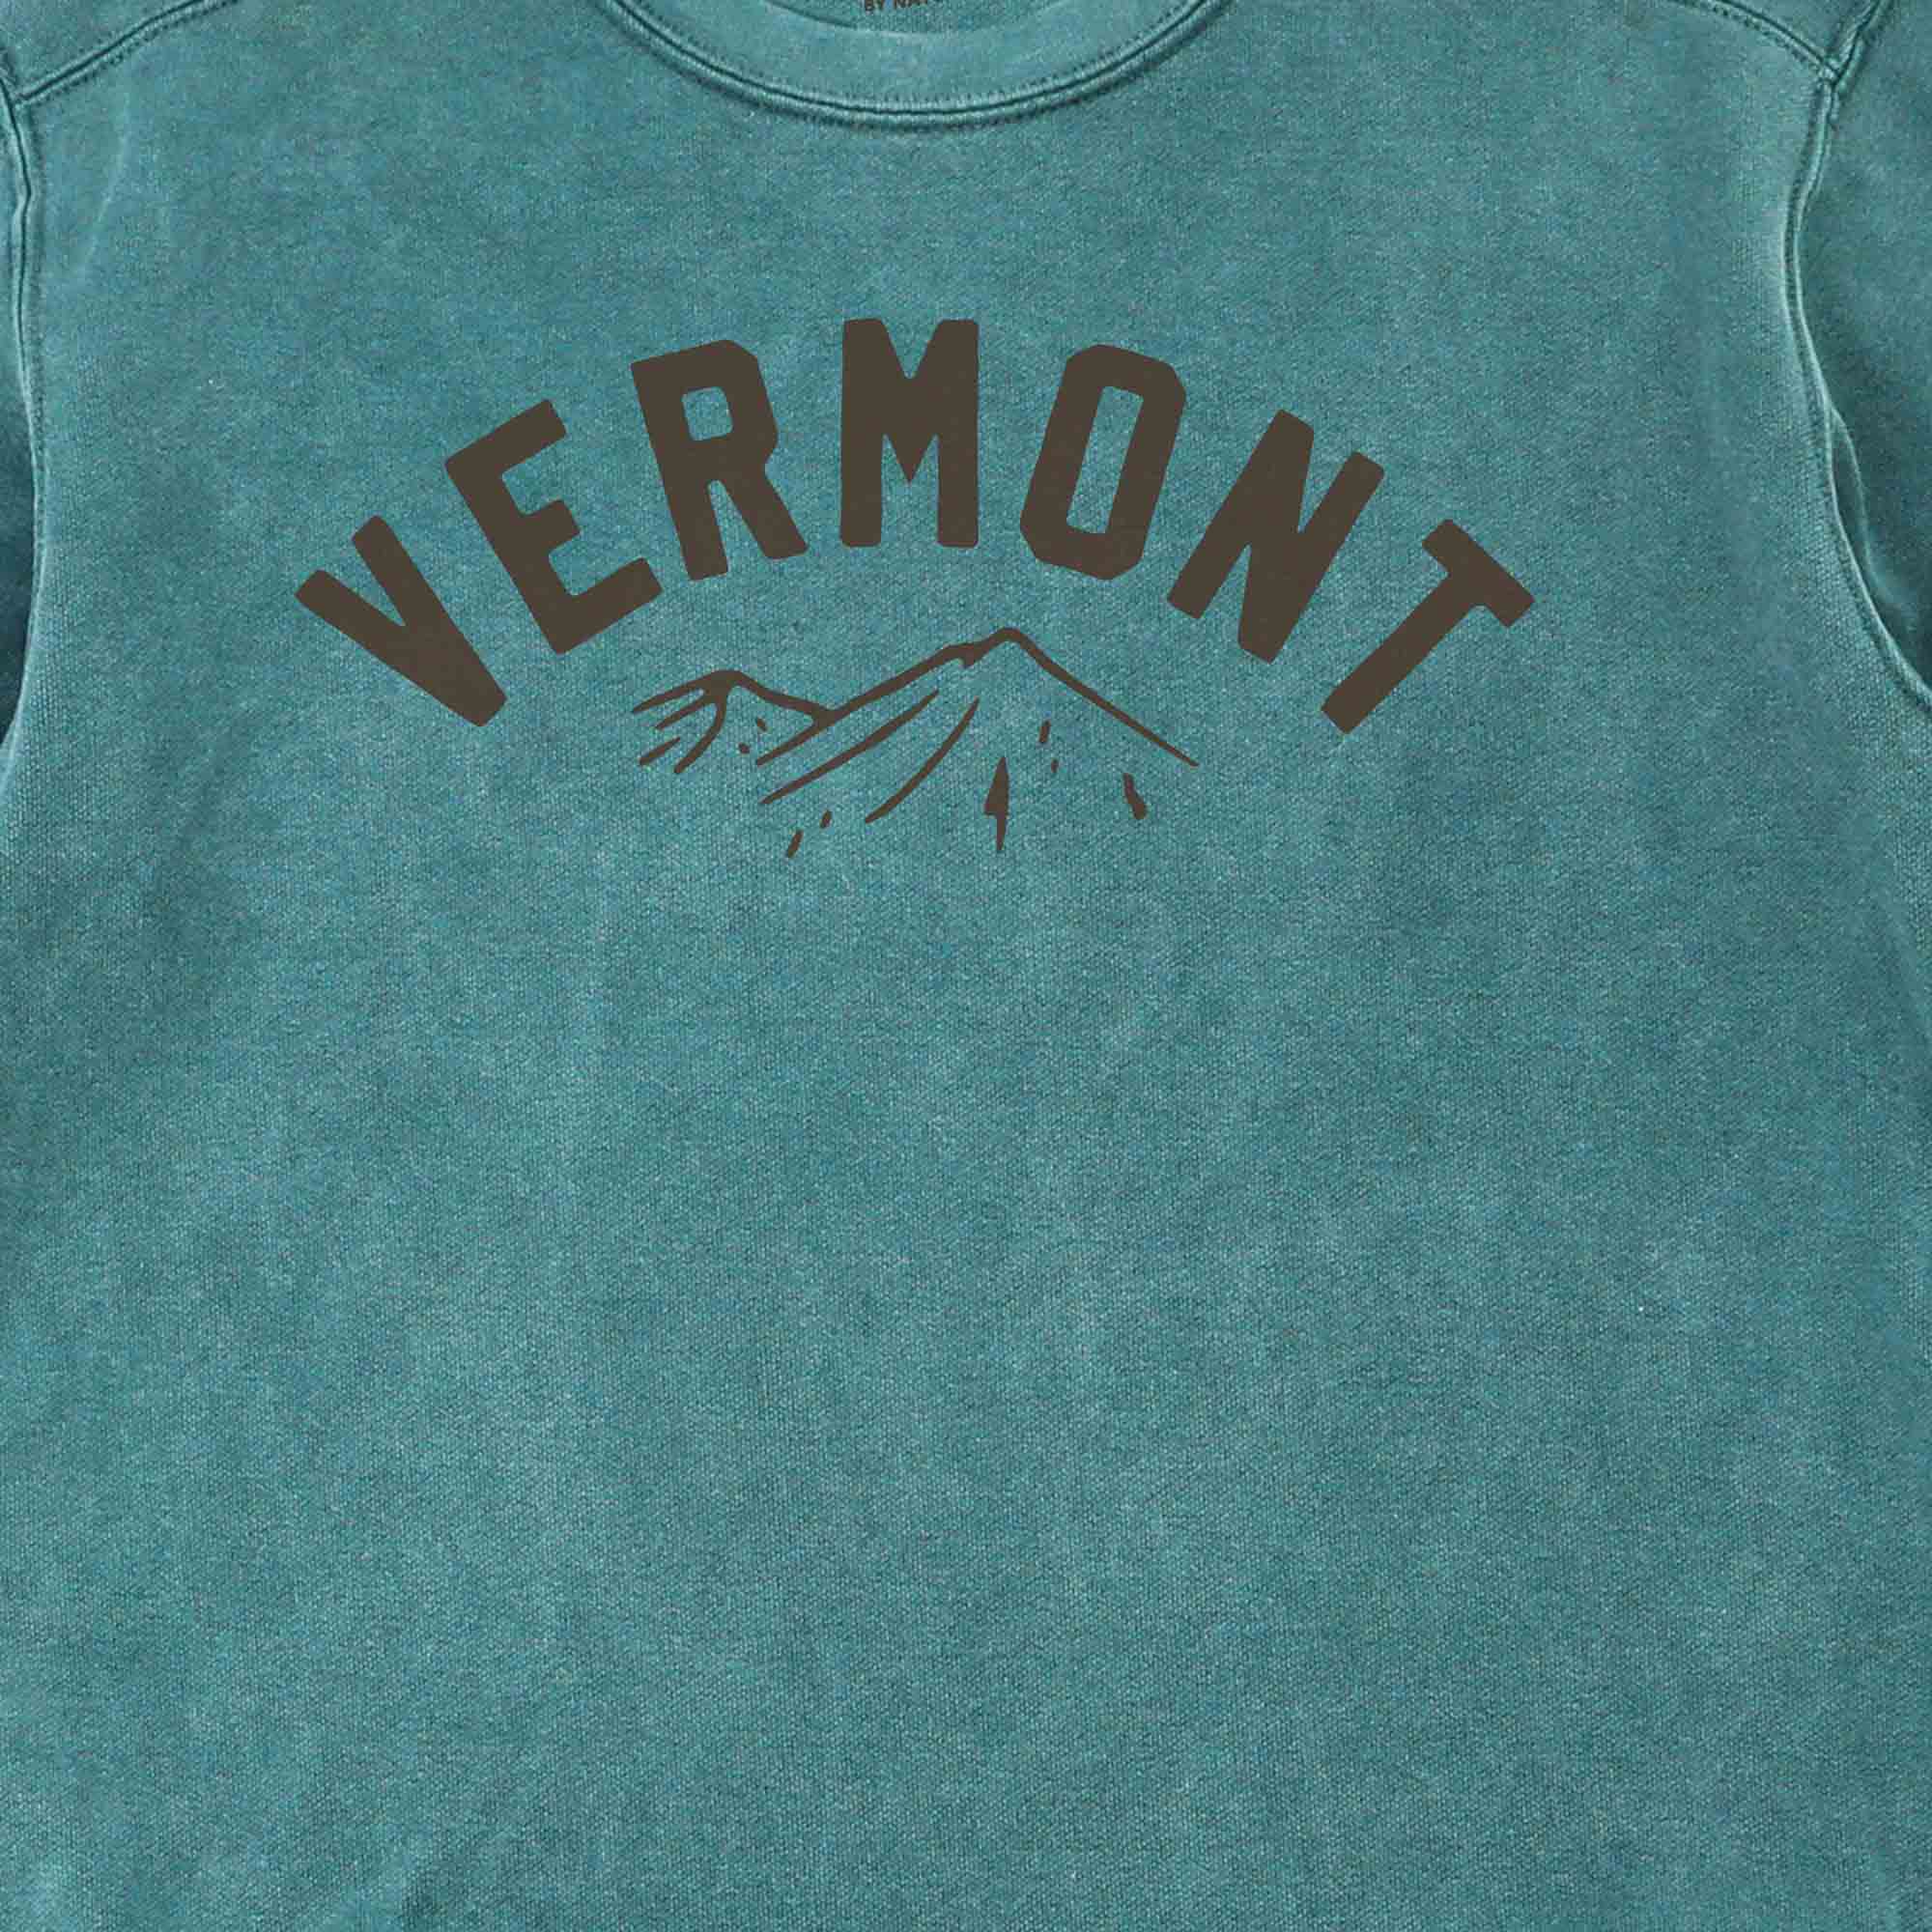 Vermont Vintage Wash Crewneck